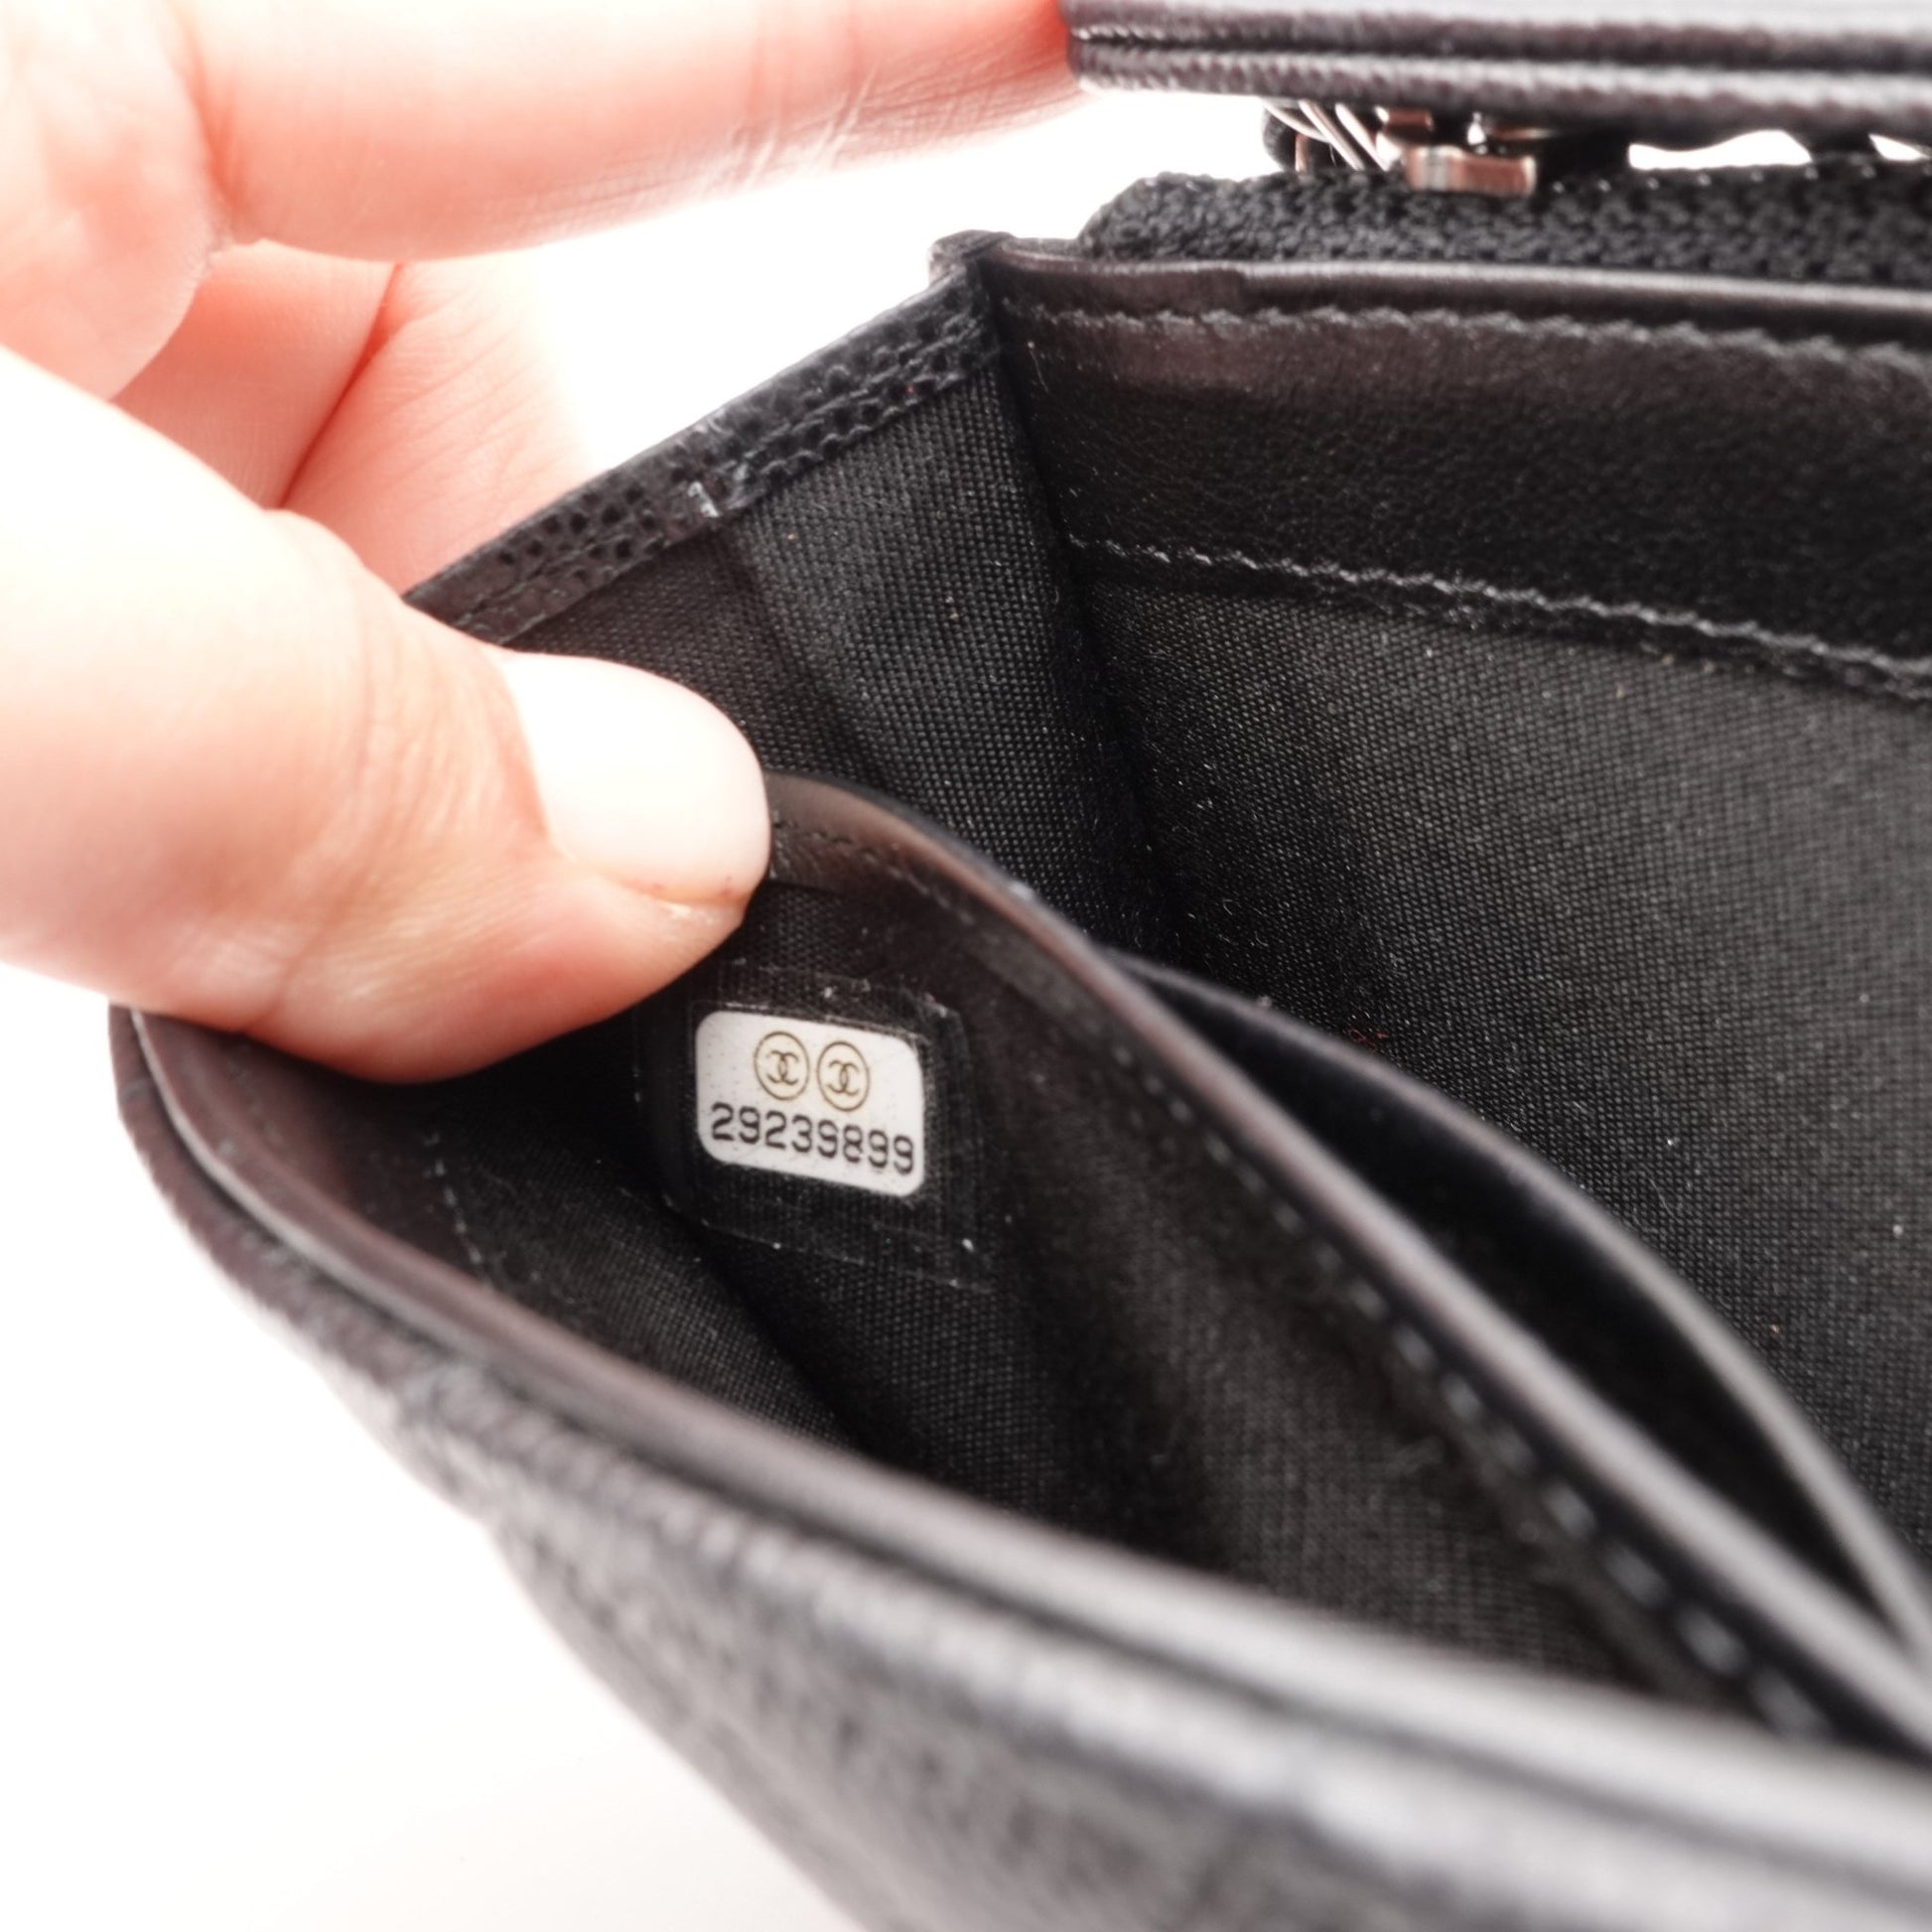 CHANEL Caviar Boy Long Flap Wallet on Chain - Bag Envy